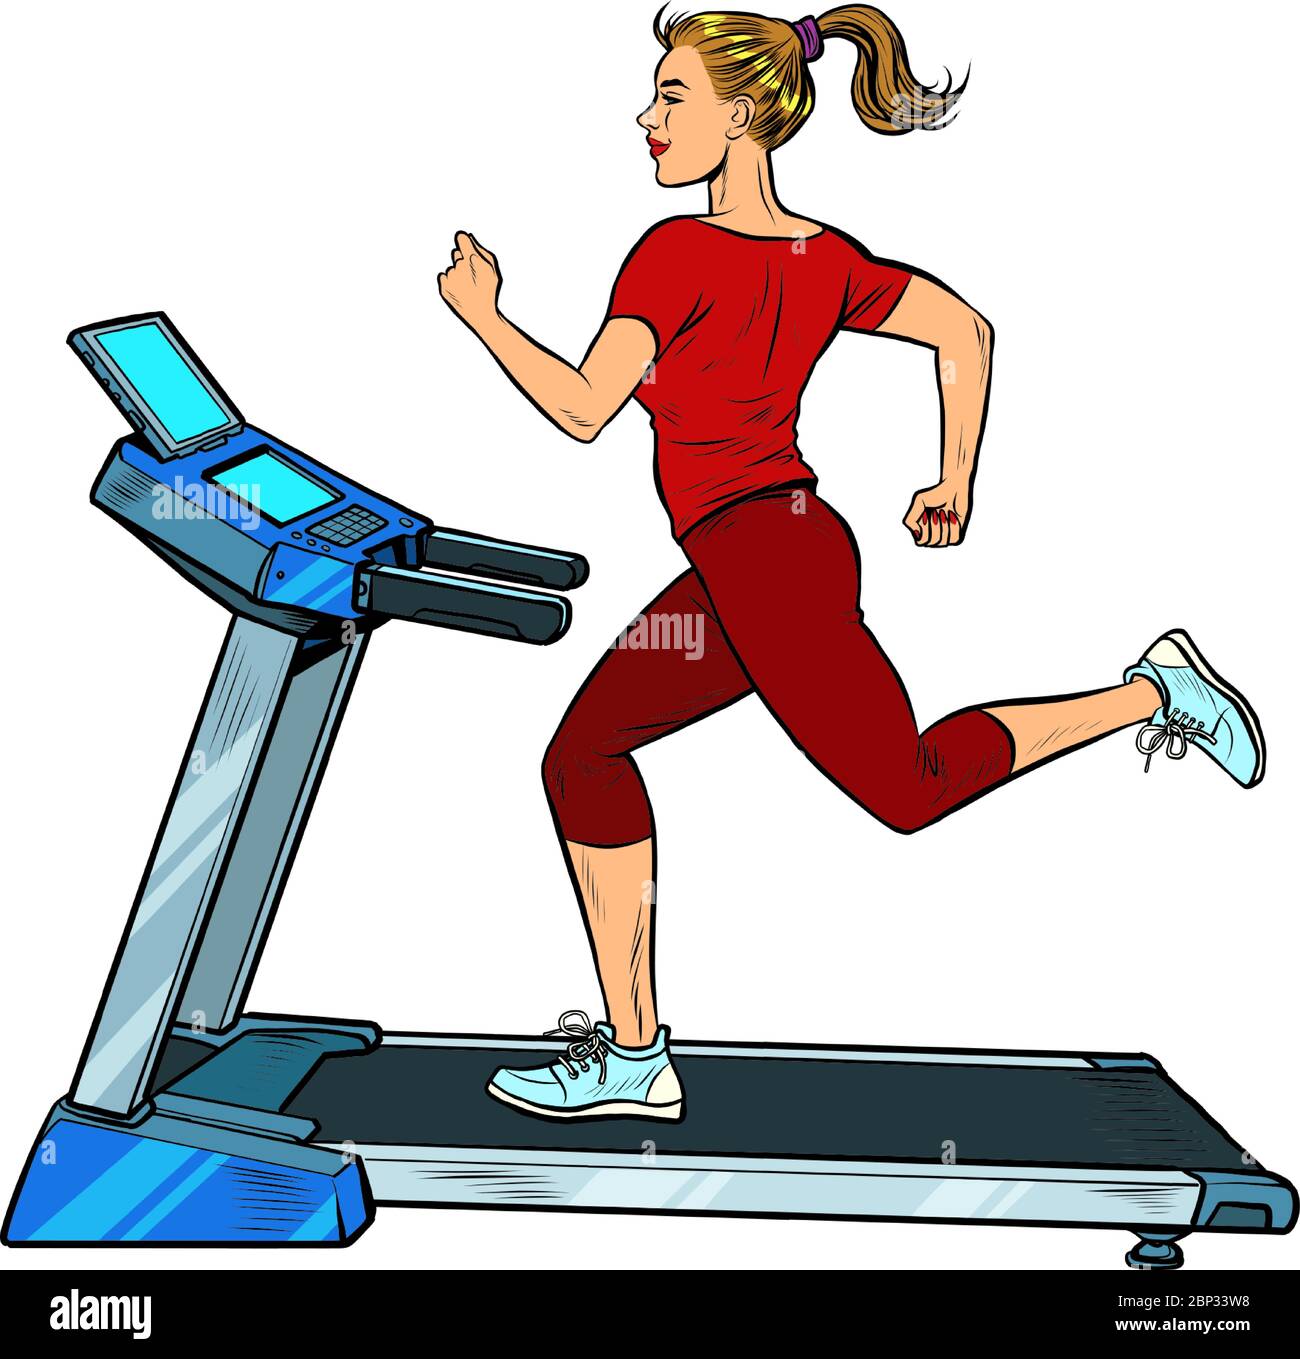 treadmill, sports equipment for training. fitness room Stock Vector